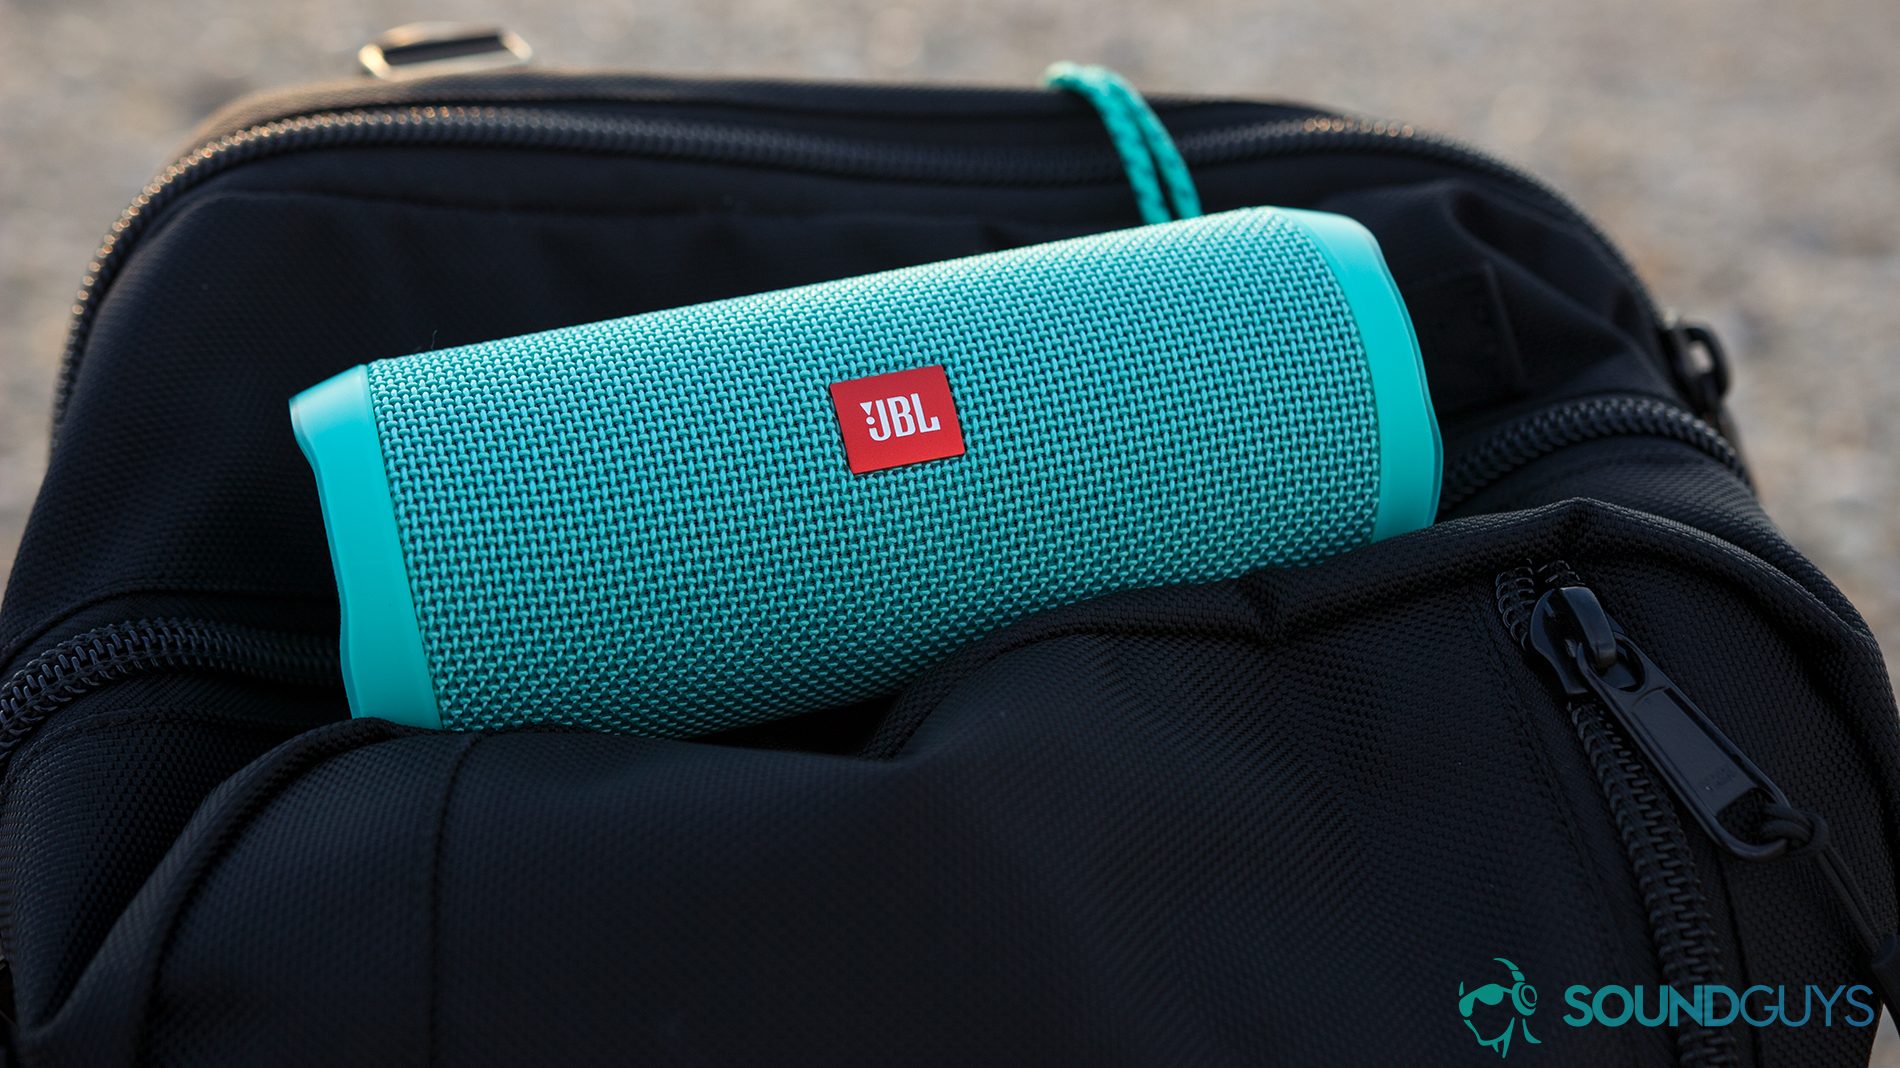 A picture of the JBL Flip 4 waterproof speakers in aqua blue on top of a black backpack.